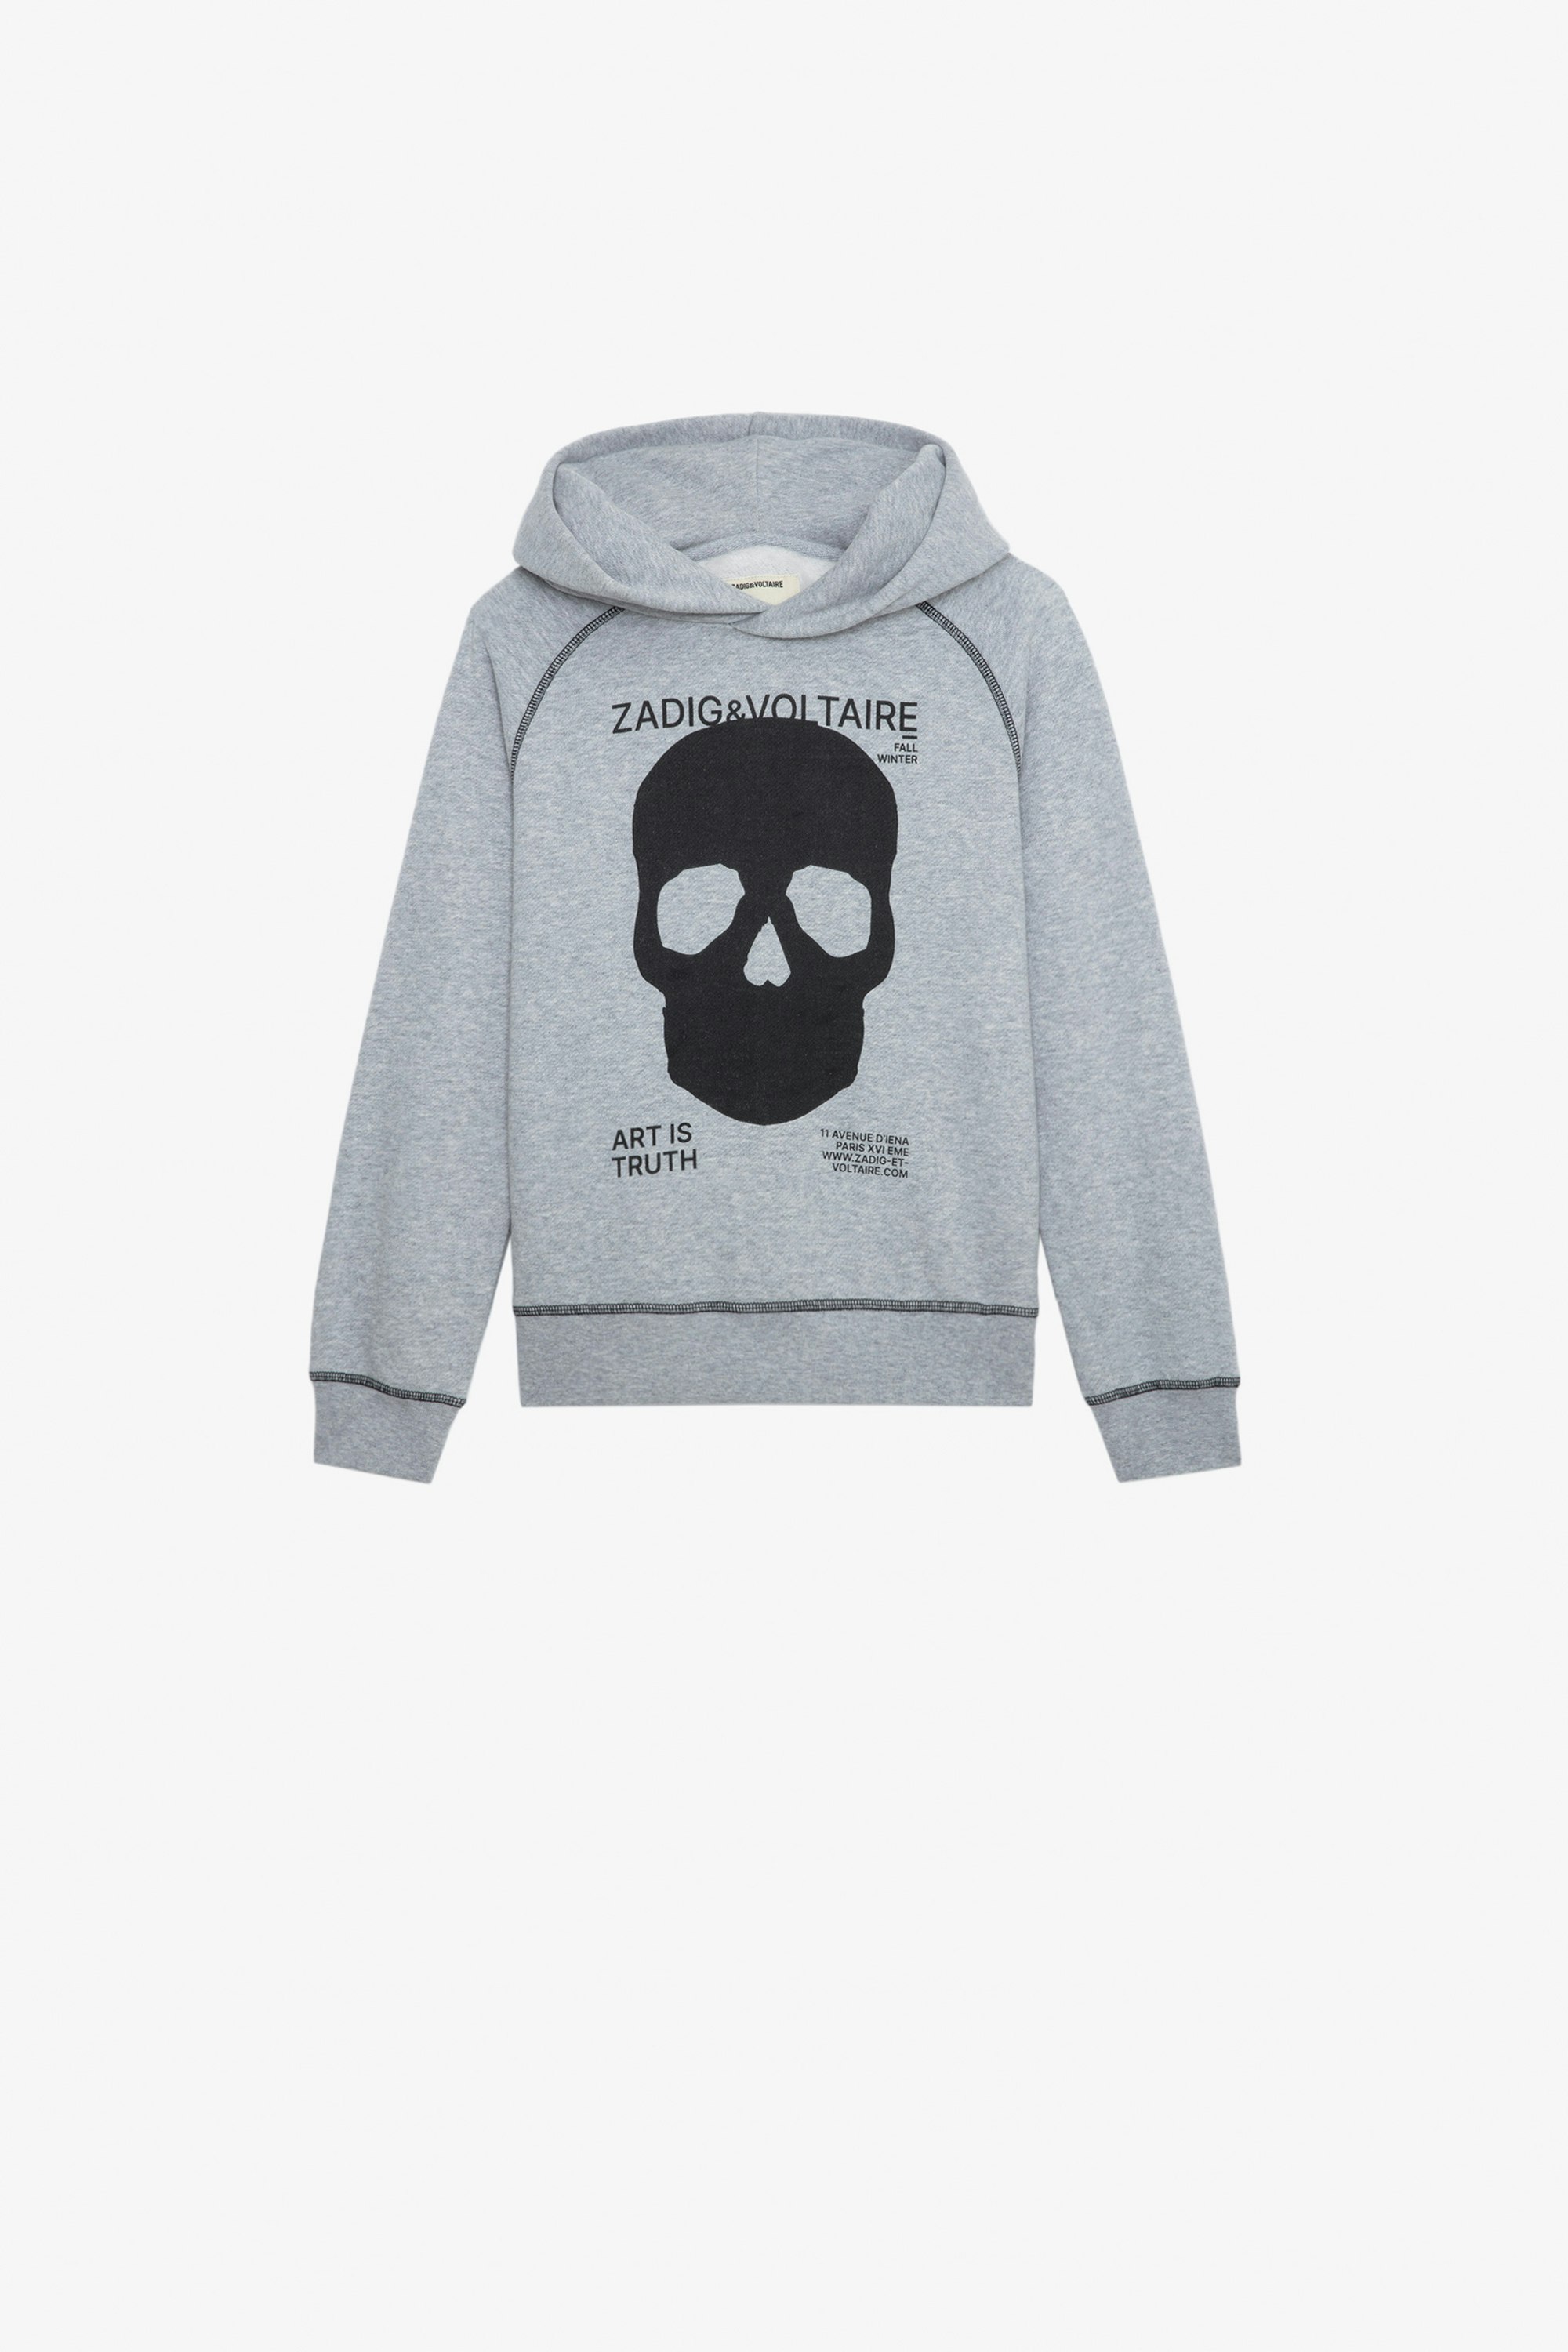 Alvin Boys' Hoodie - Boys' cotton sweatshirt with black skull motif on front